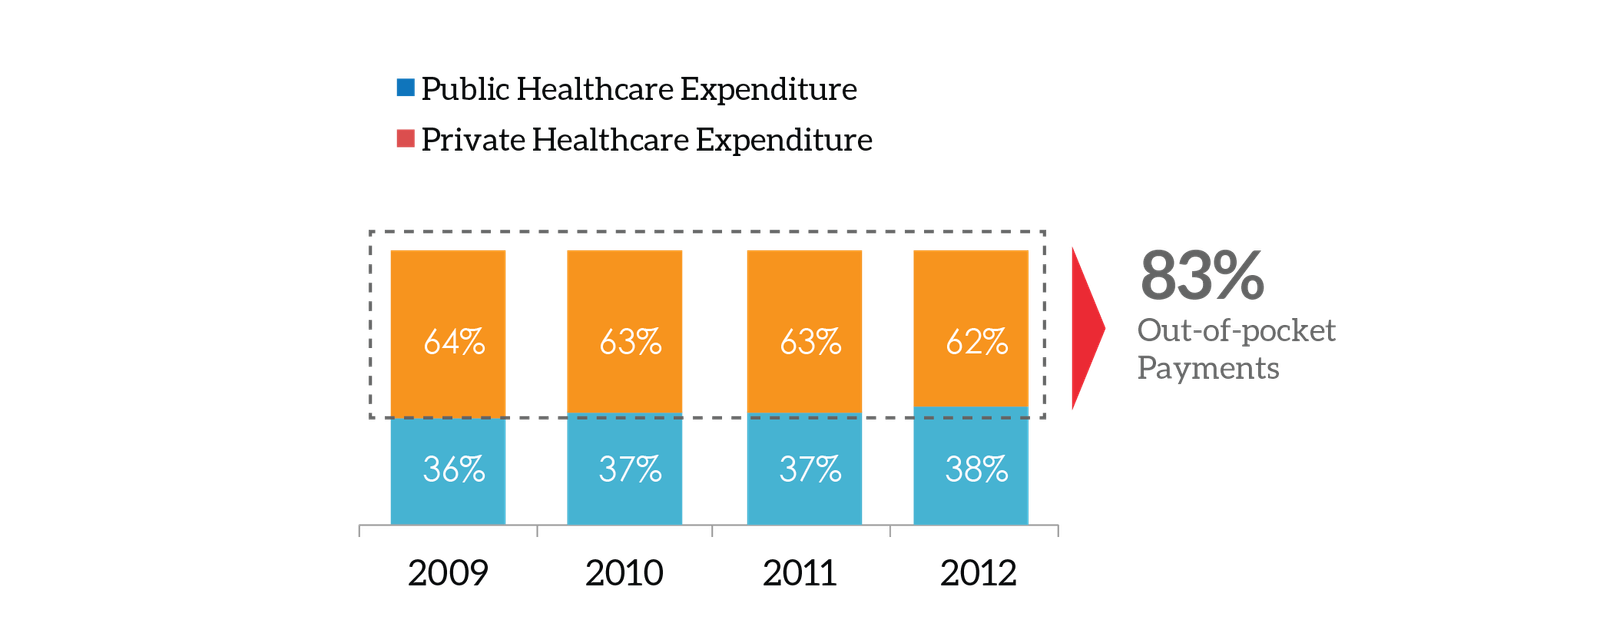 Philippine Healthcare Expenditure Split